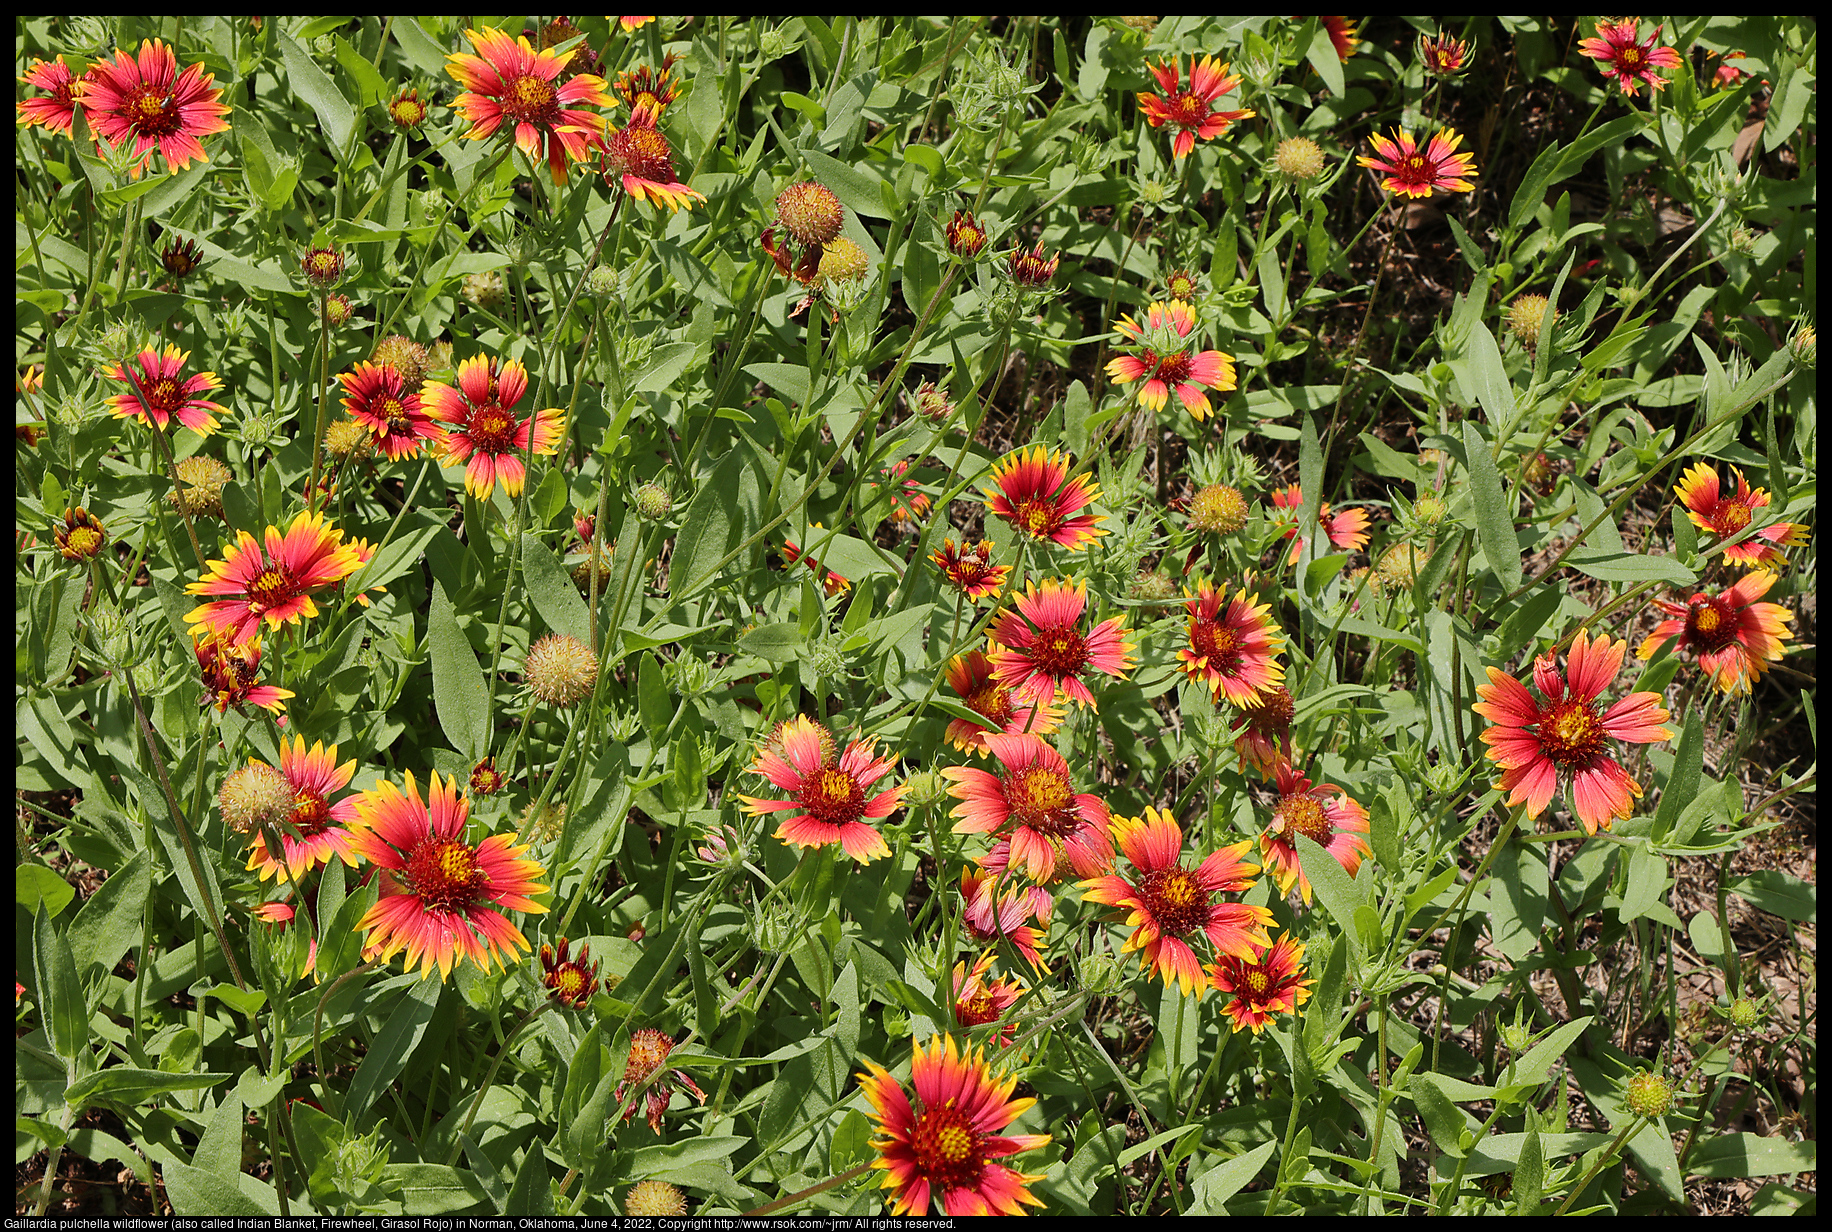 Gaillardia pulchella wildflower (also called Indian Blanket, Firewheel, Girasol Rojo) in Norman, Oklahoma, June 4, 2022